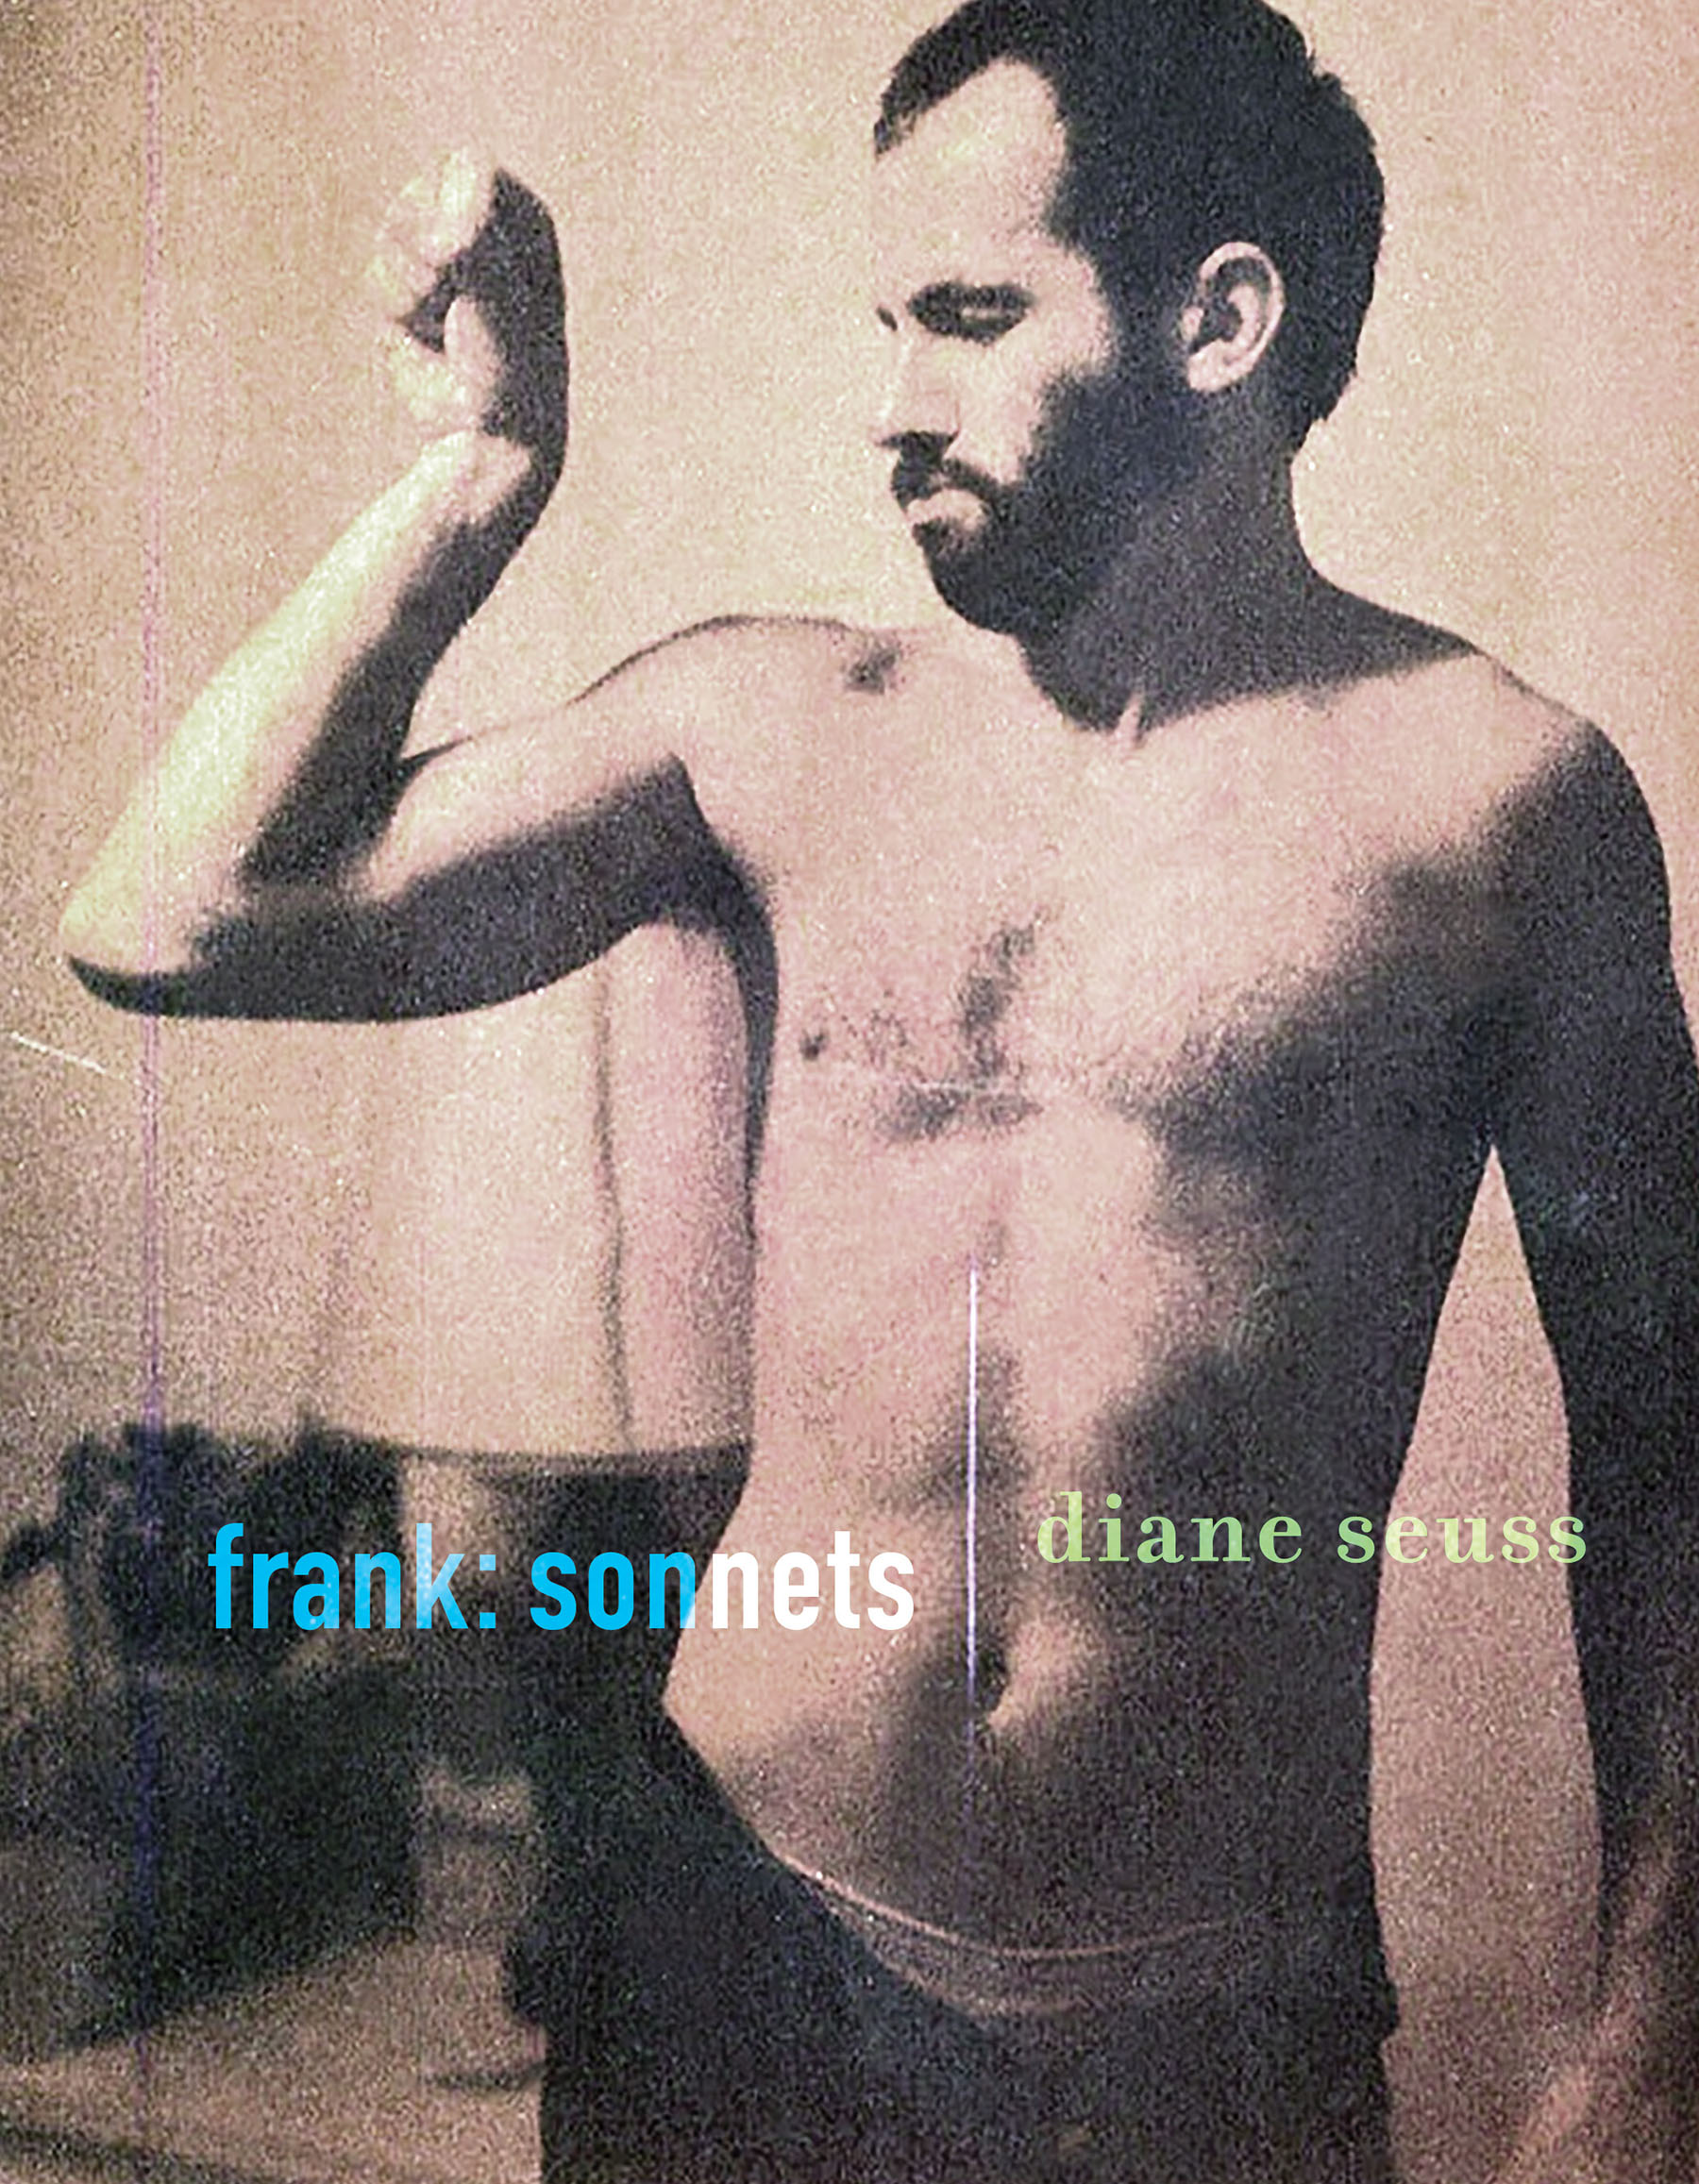 Seuss - Frank: sonnets cover